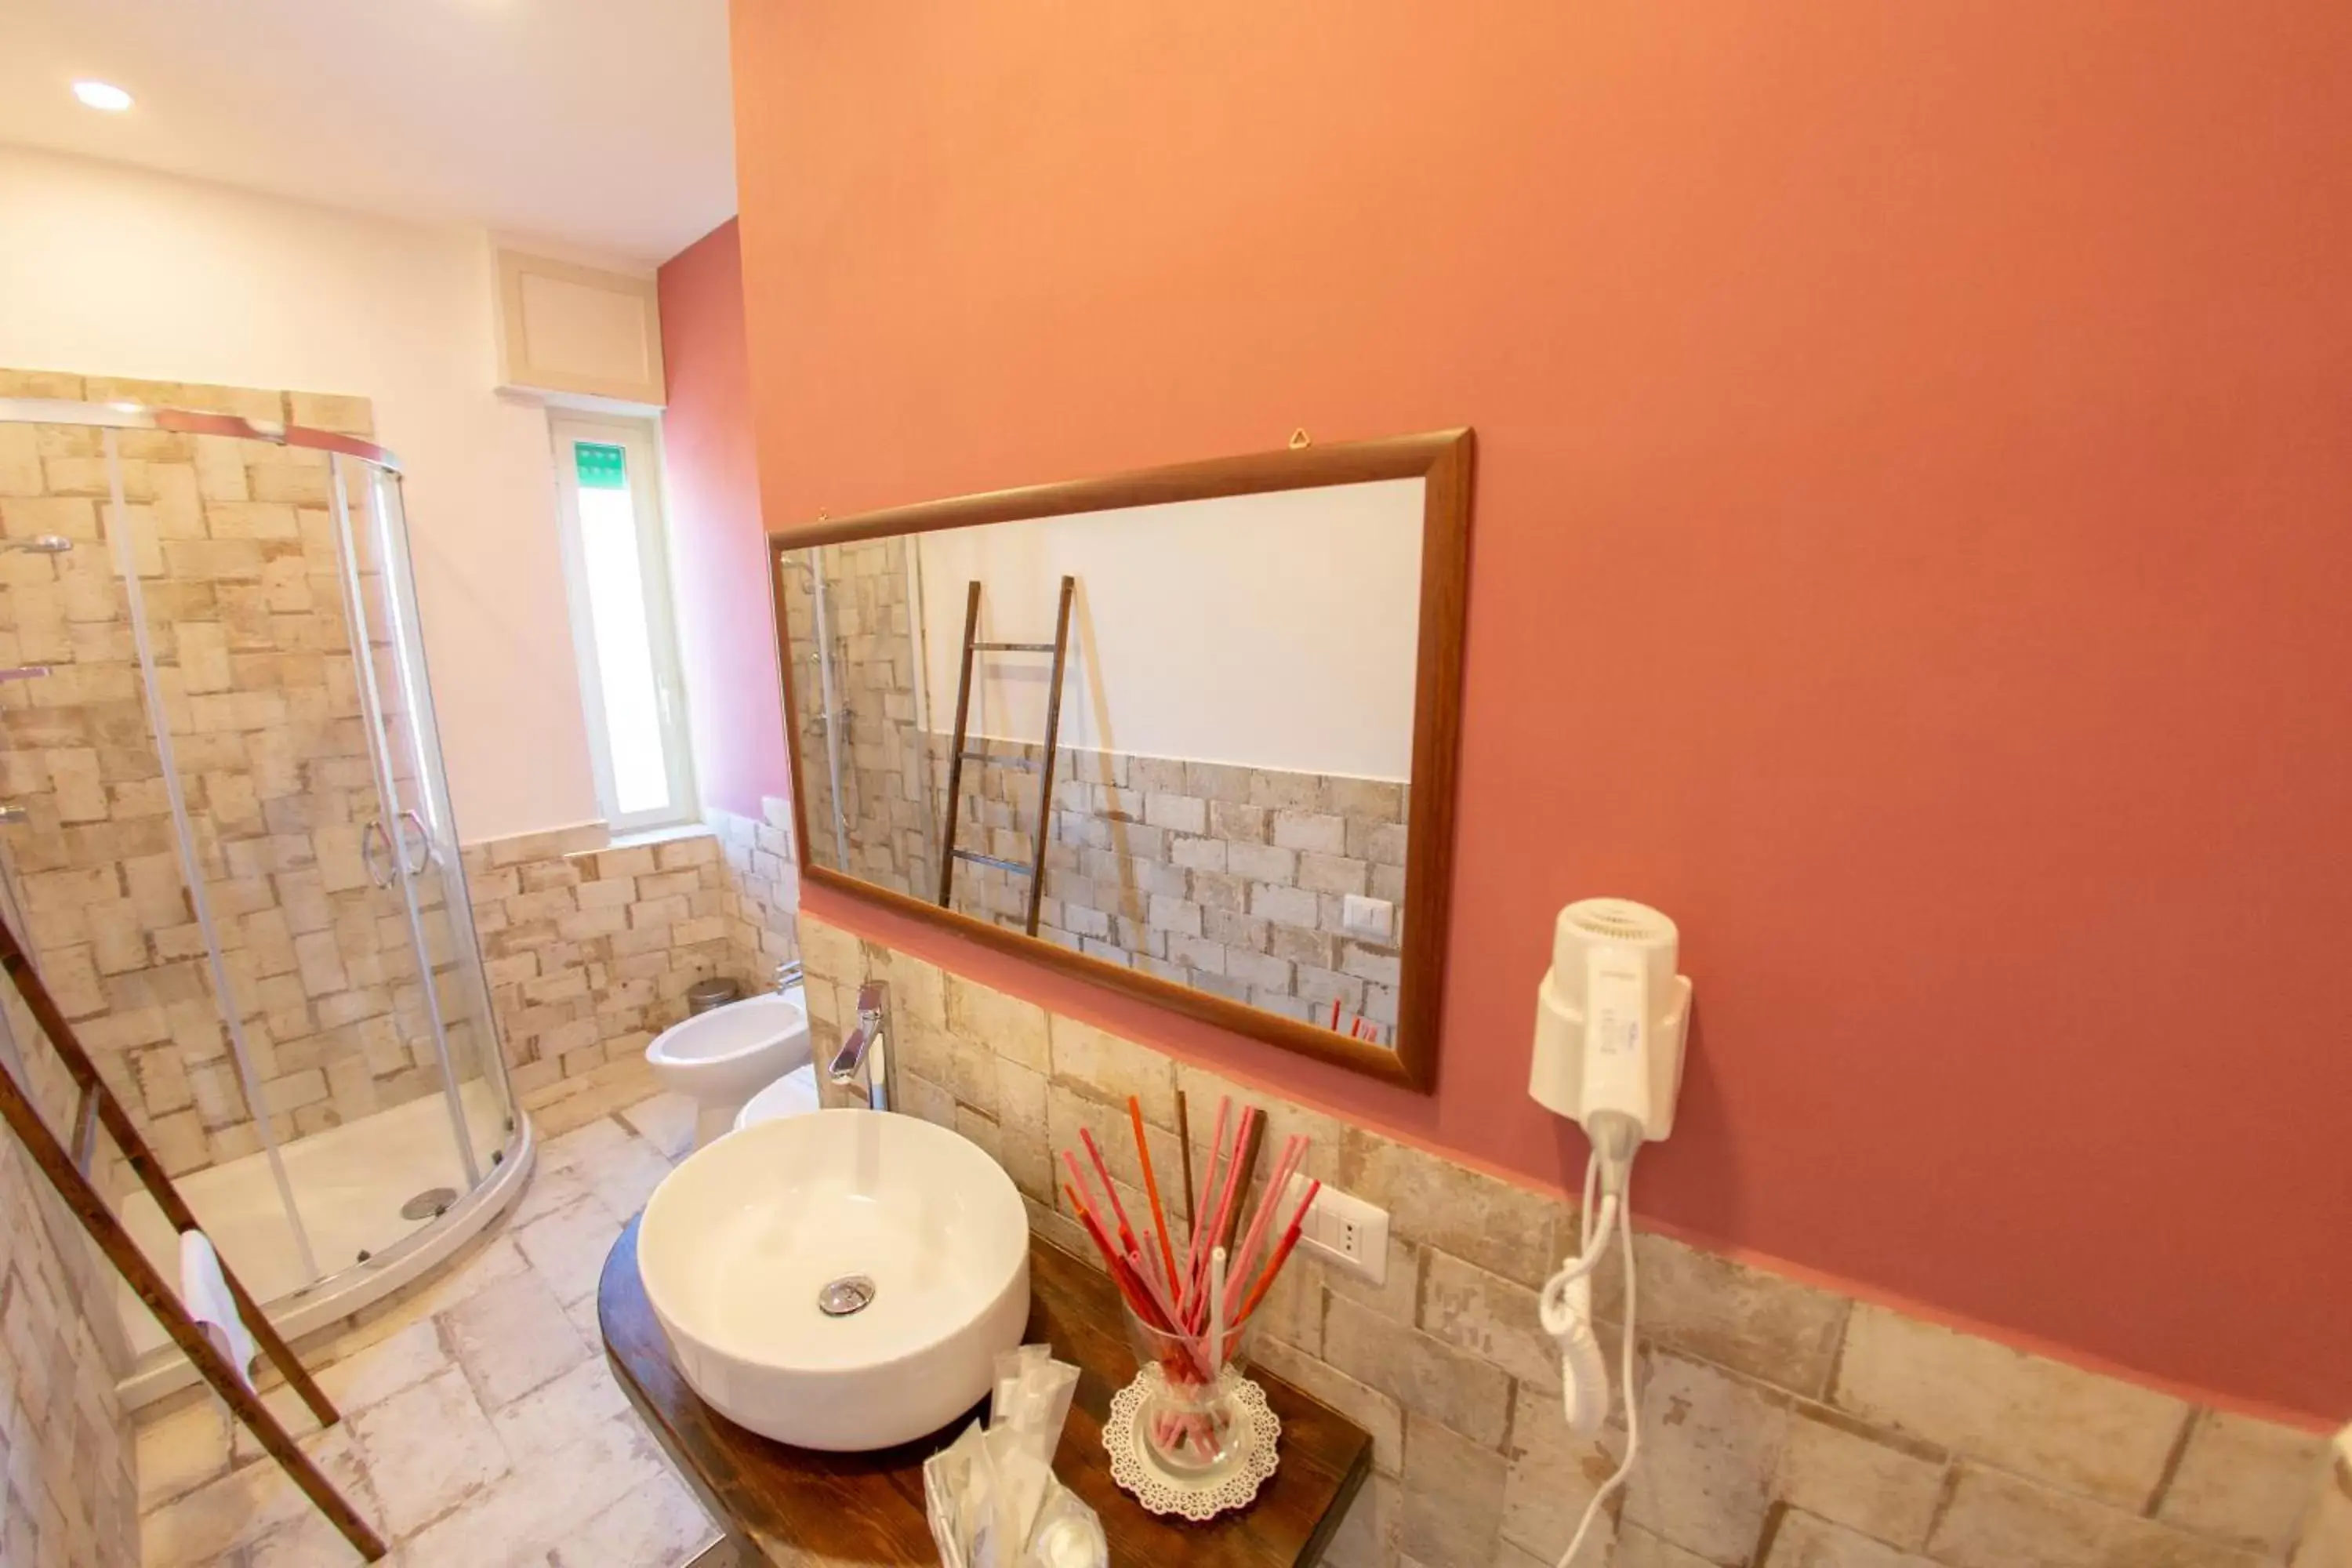 Bathroom in Civico 364